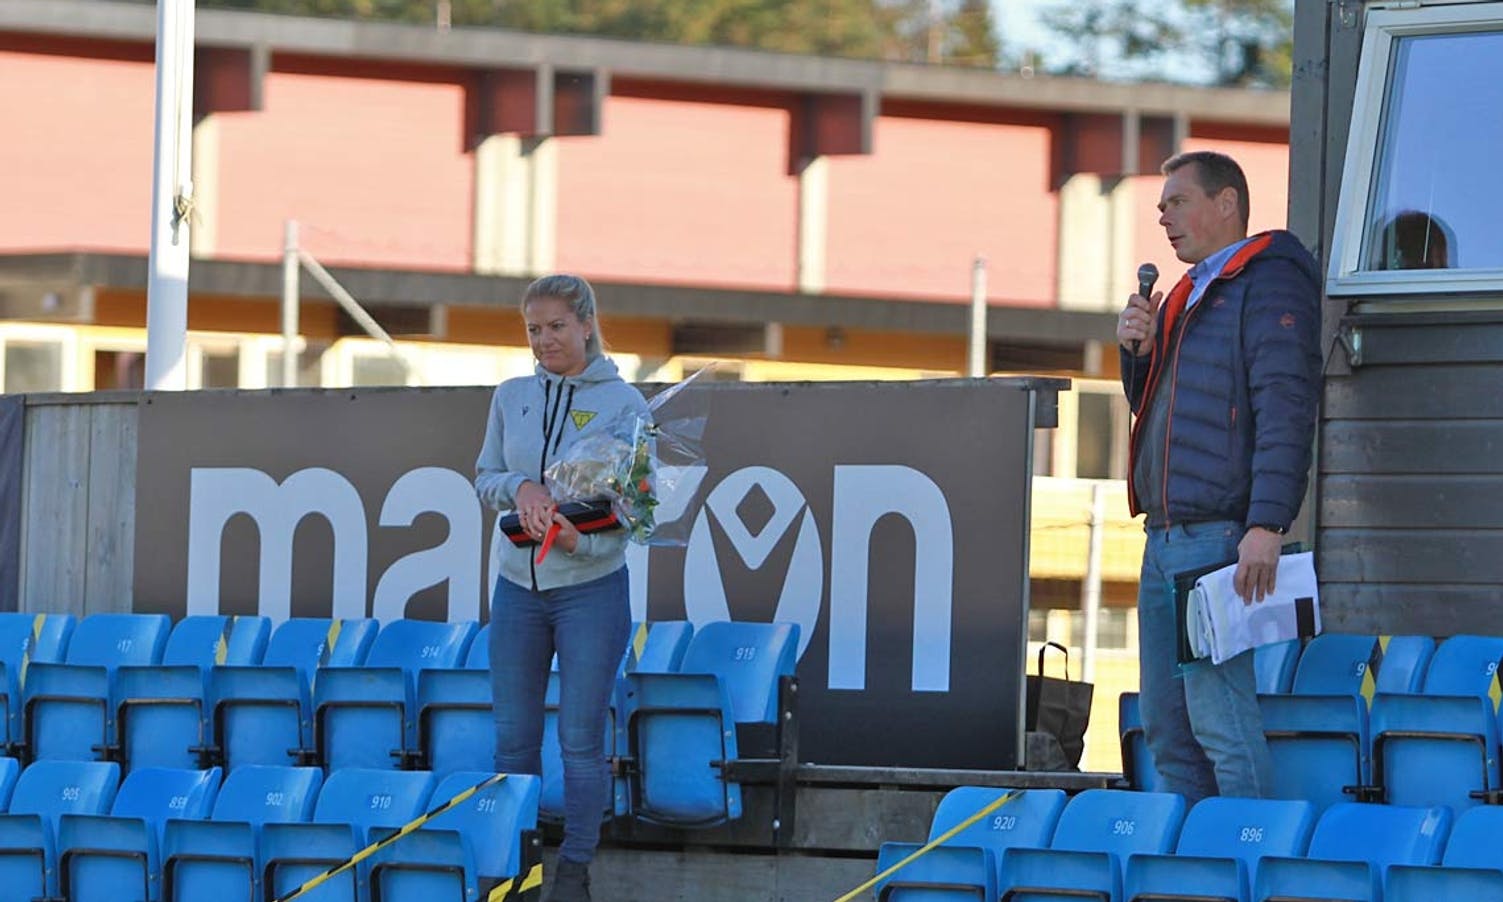 Styremedlem Marita fekk blomar av styreleiar Leiv Gunnar. (Foto: KVB)